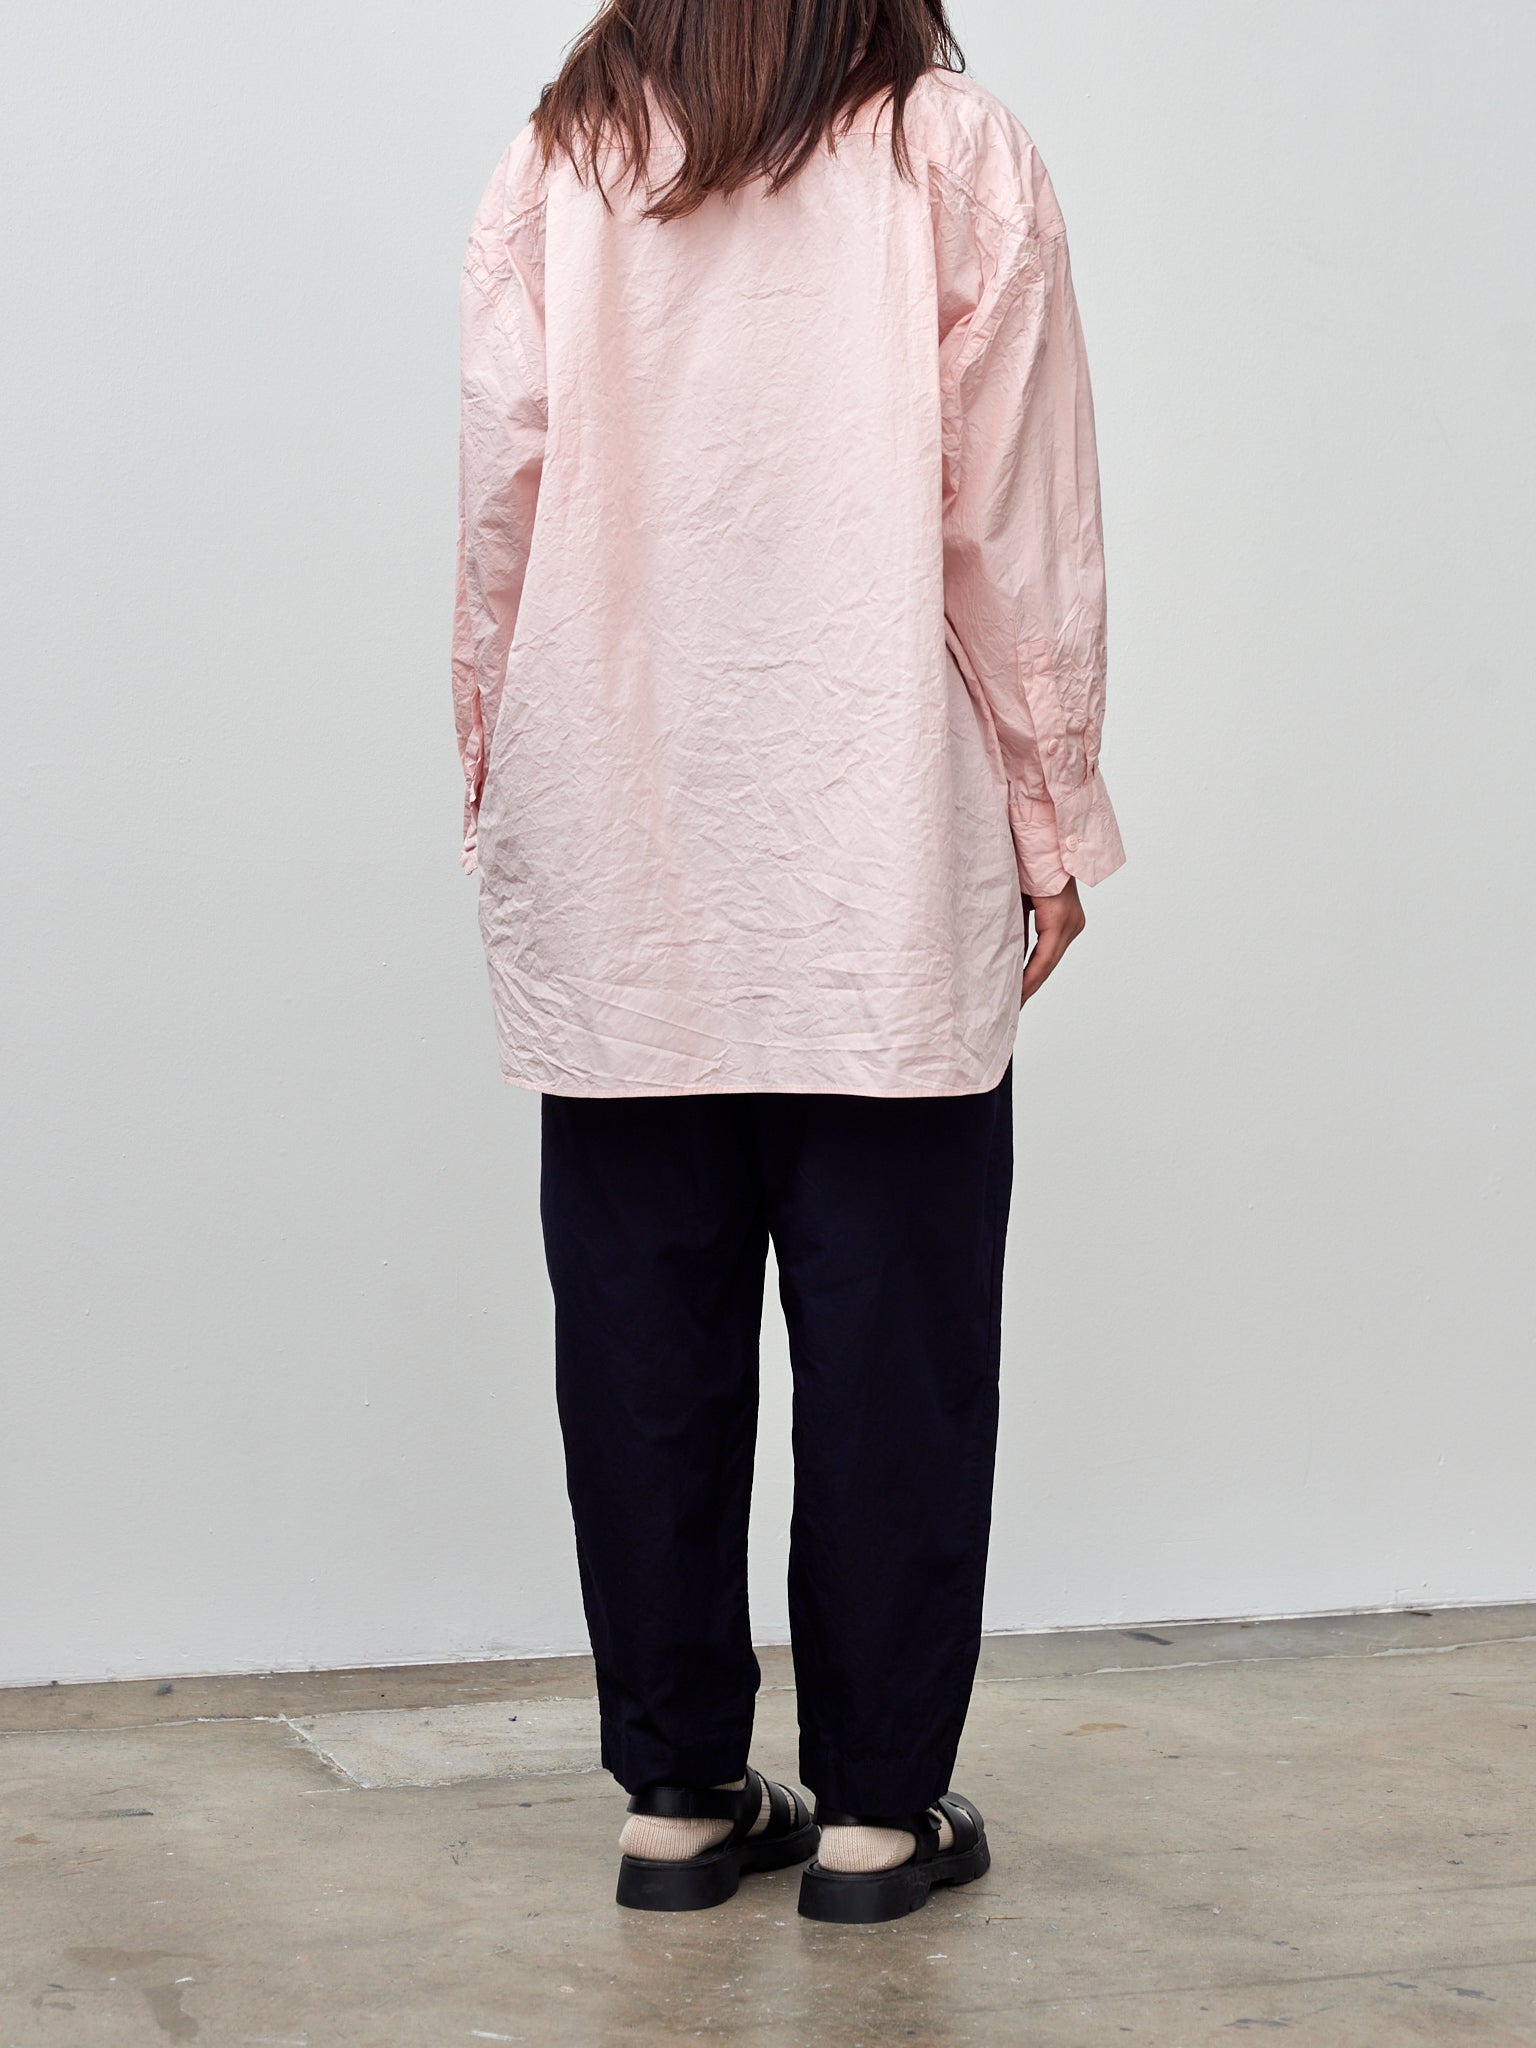 Namu Shop - Casey Casey Hamnet Shirt - Pink